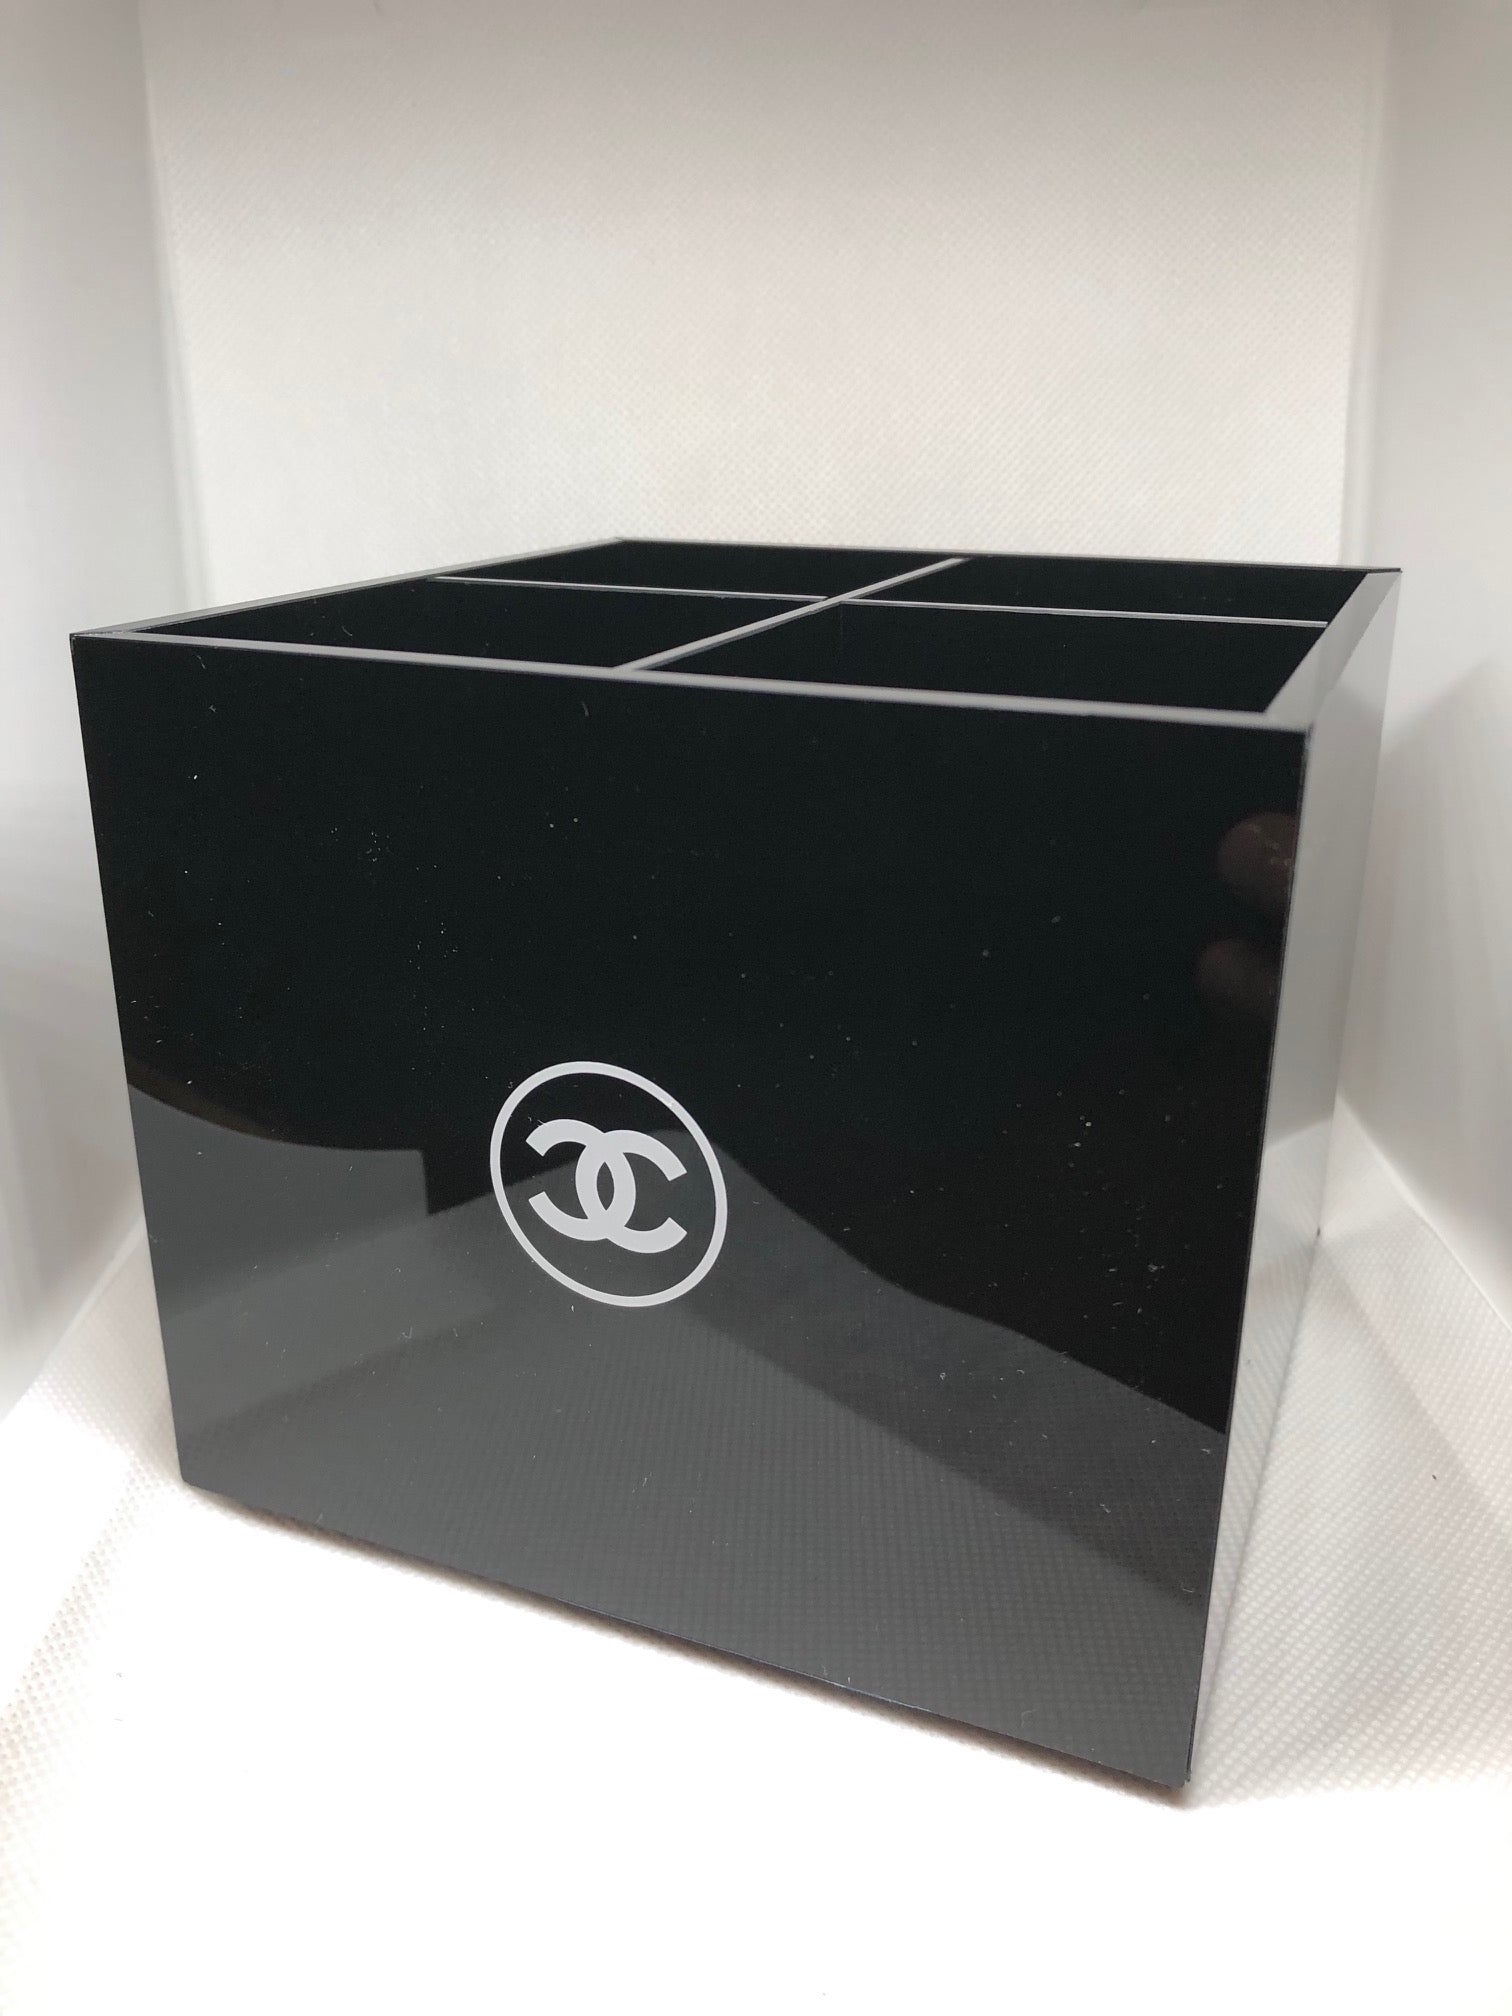 Chanel Makeup Box Organizer – Alecrim